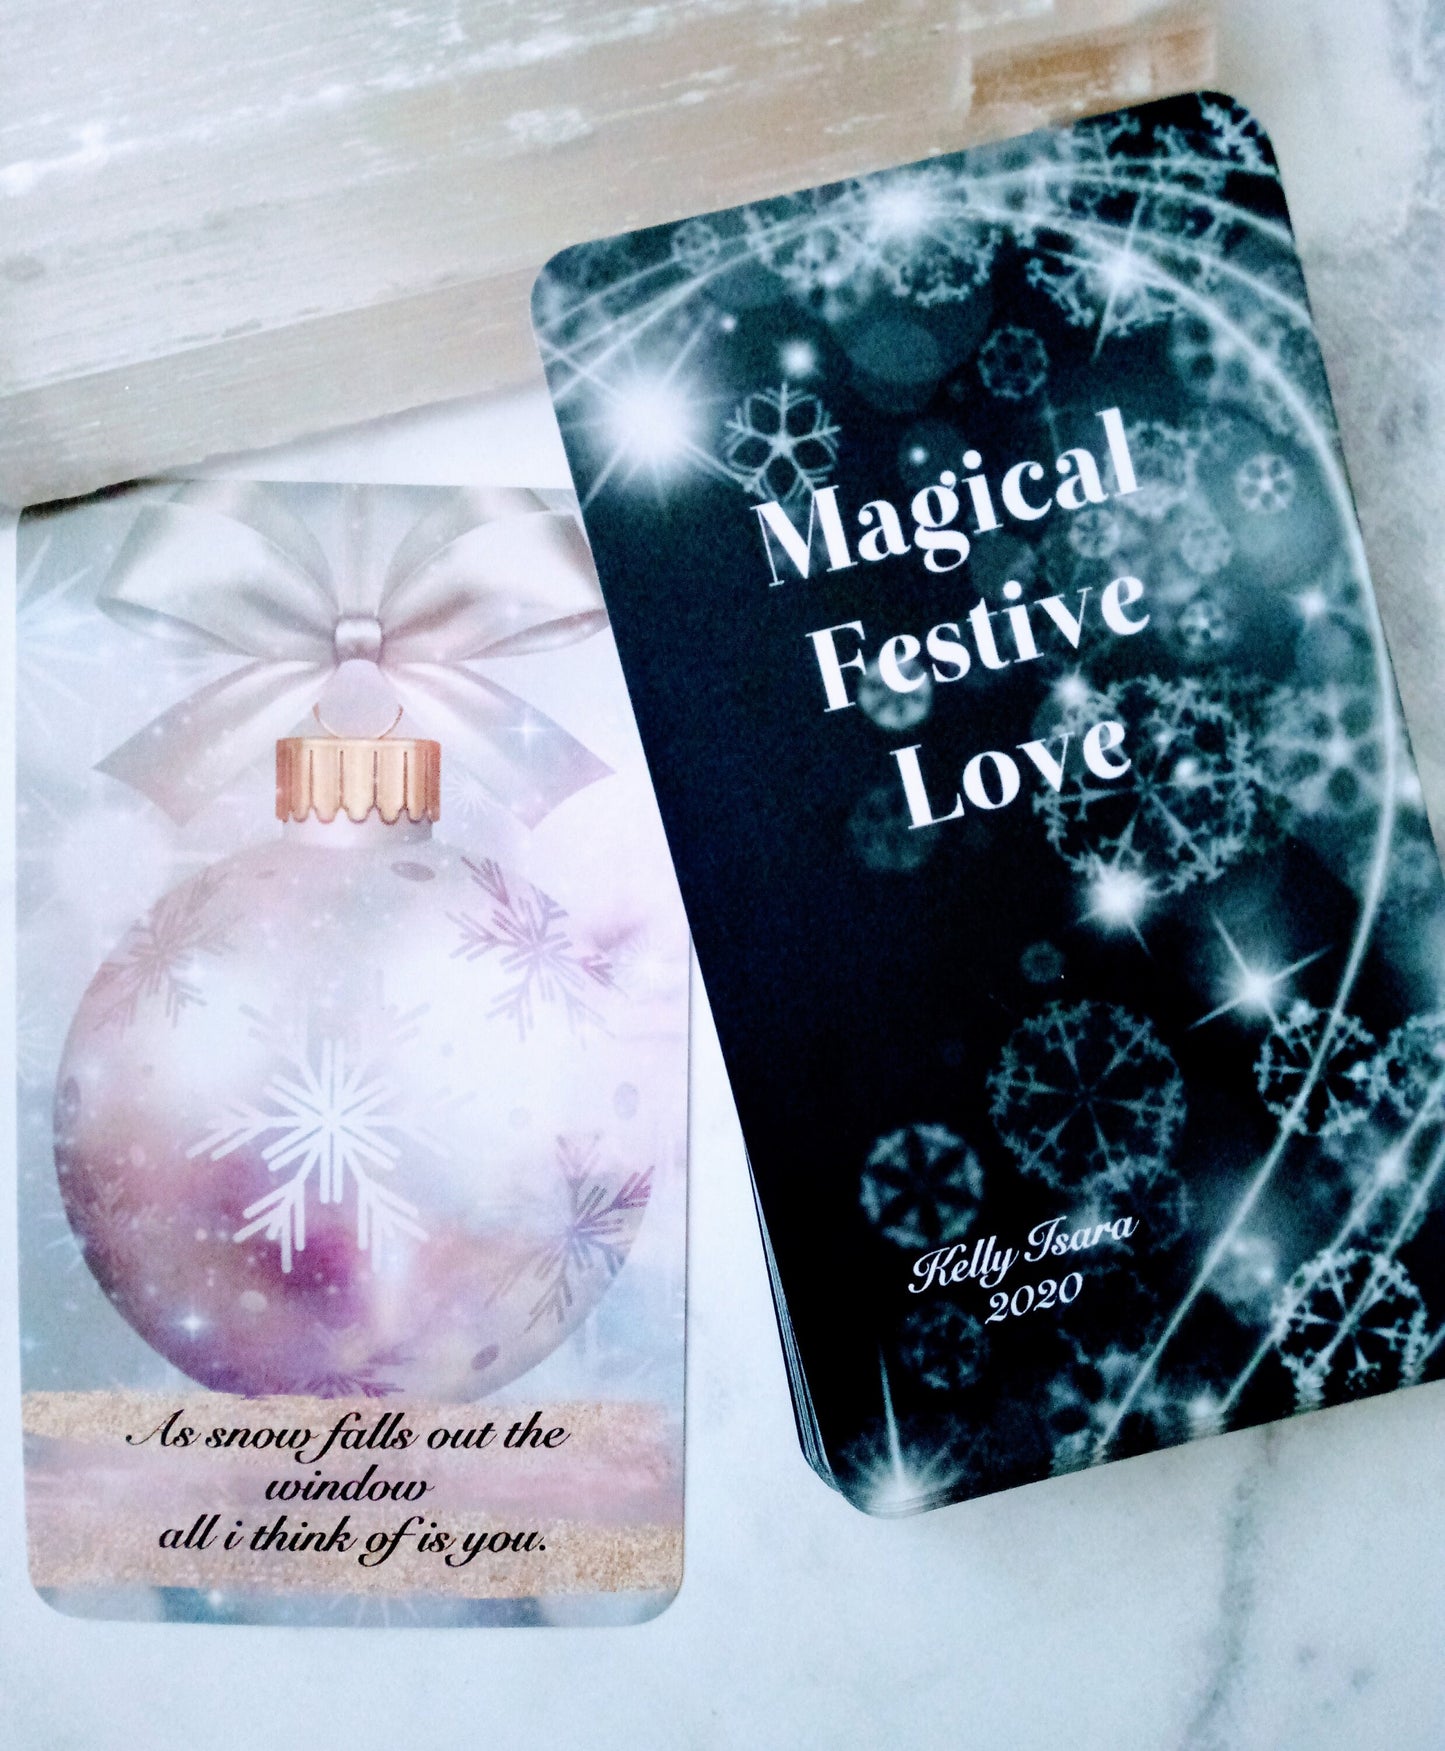 Magical Festive Love ~ Holiday love